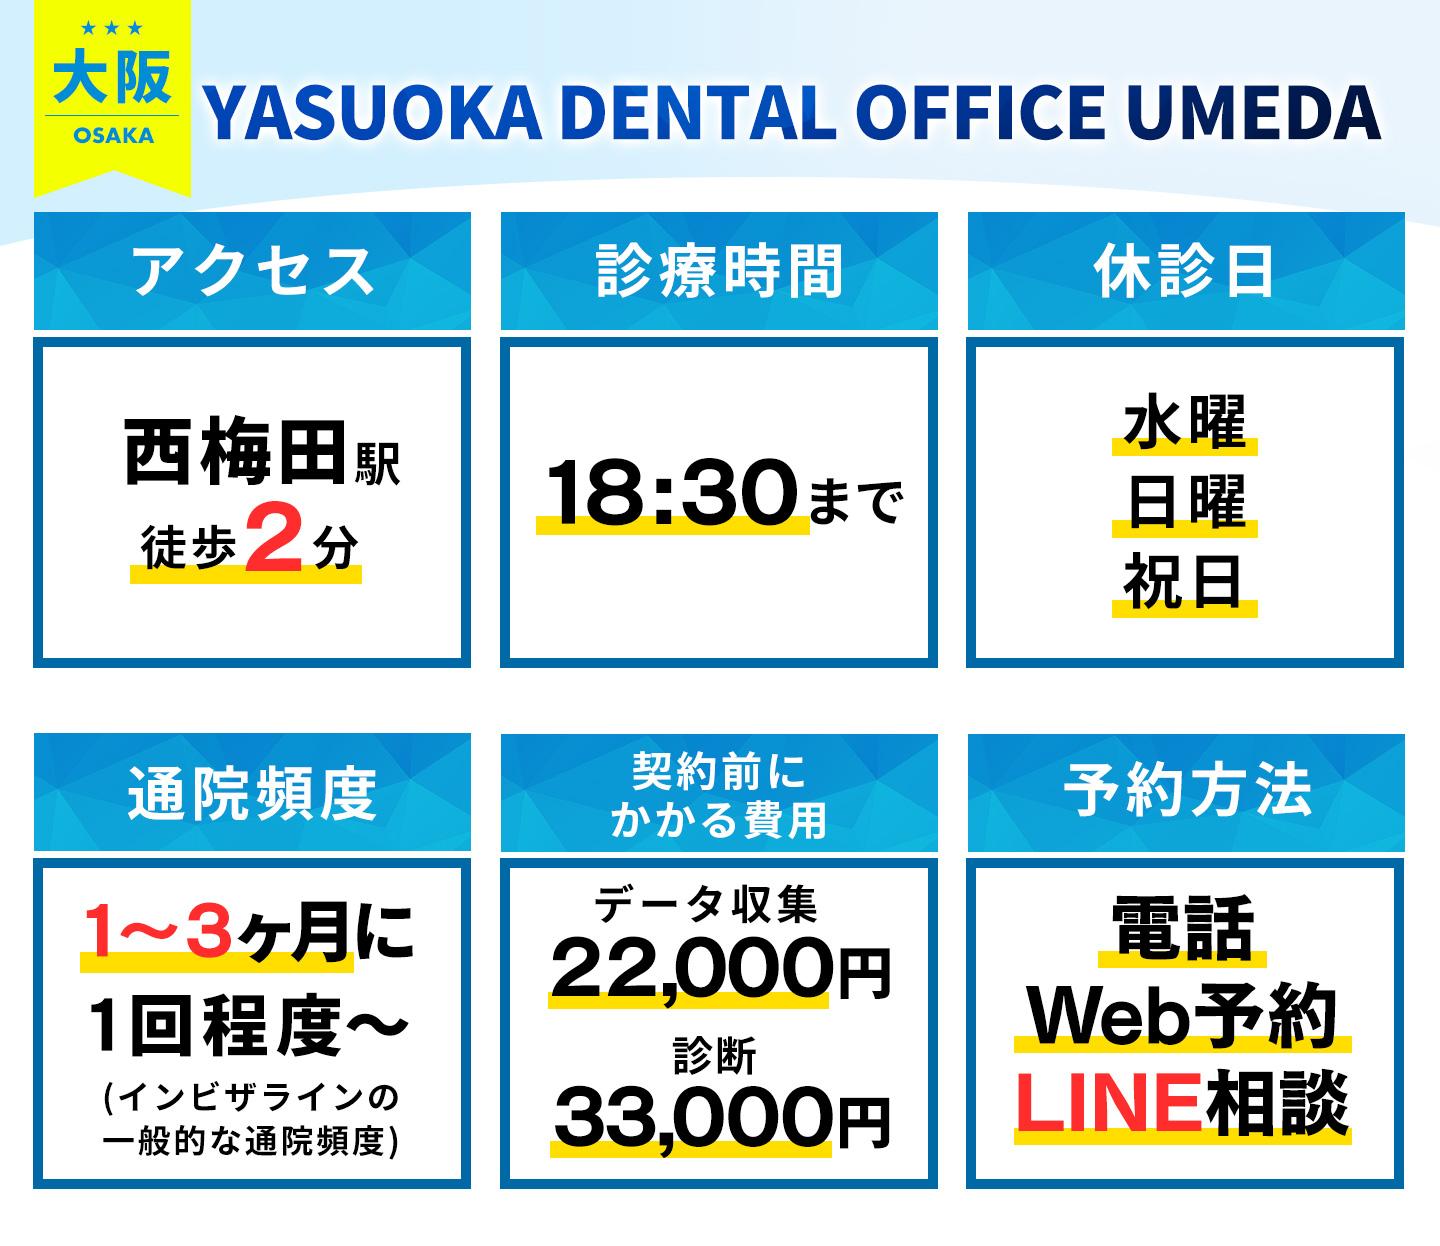 YASUOKA DENTAL OFFICE UMEDAの基本情報